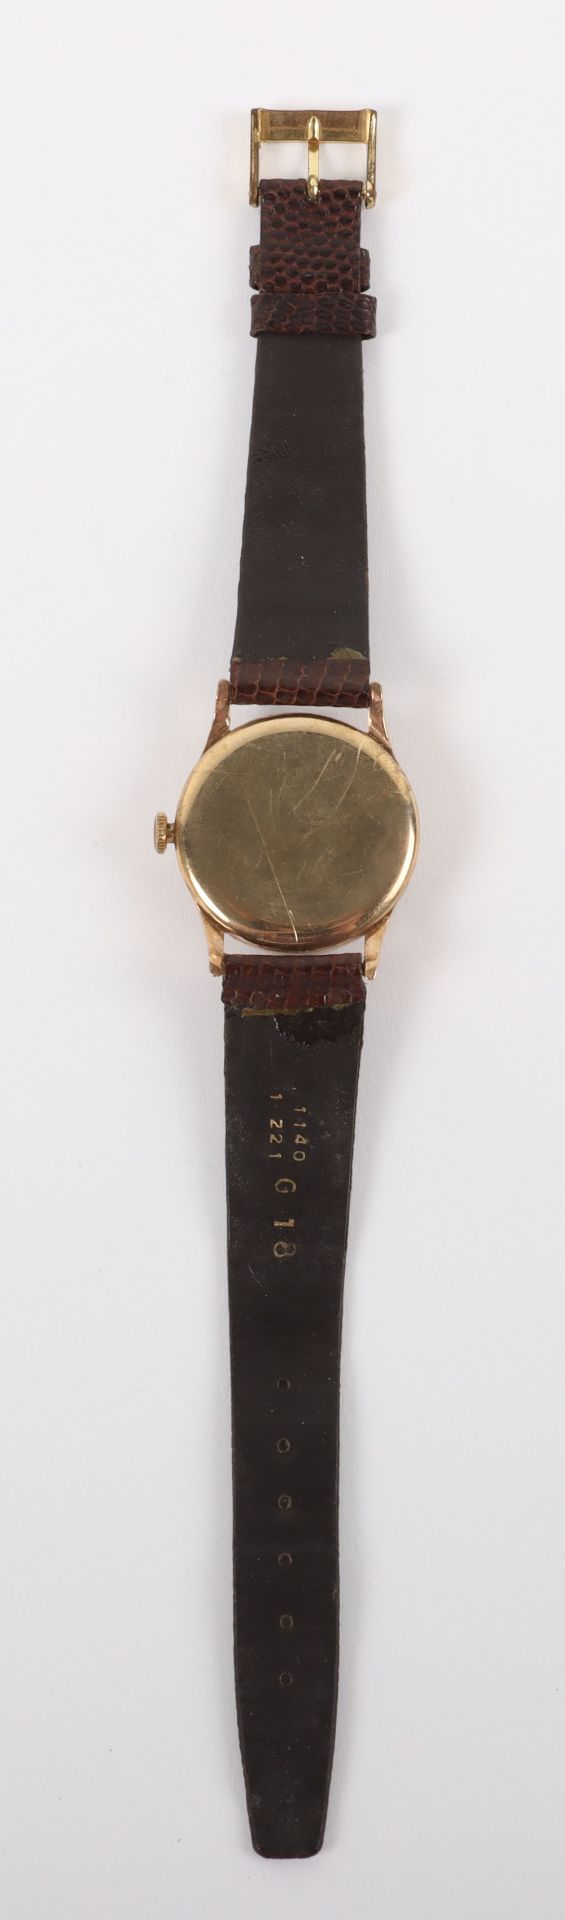 A vintage 9ct gold Audemars wristwatch, circa 1930 - Image 3 of 5